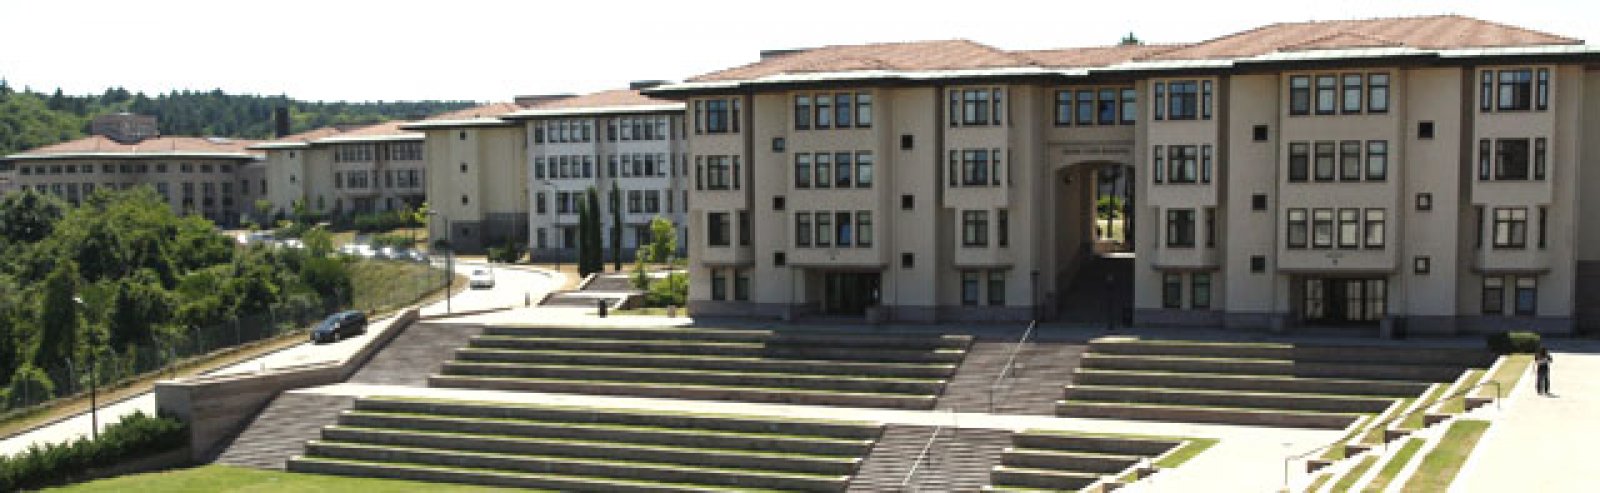 Koç University Western Dormitories